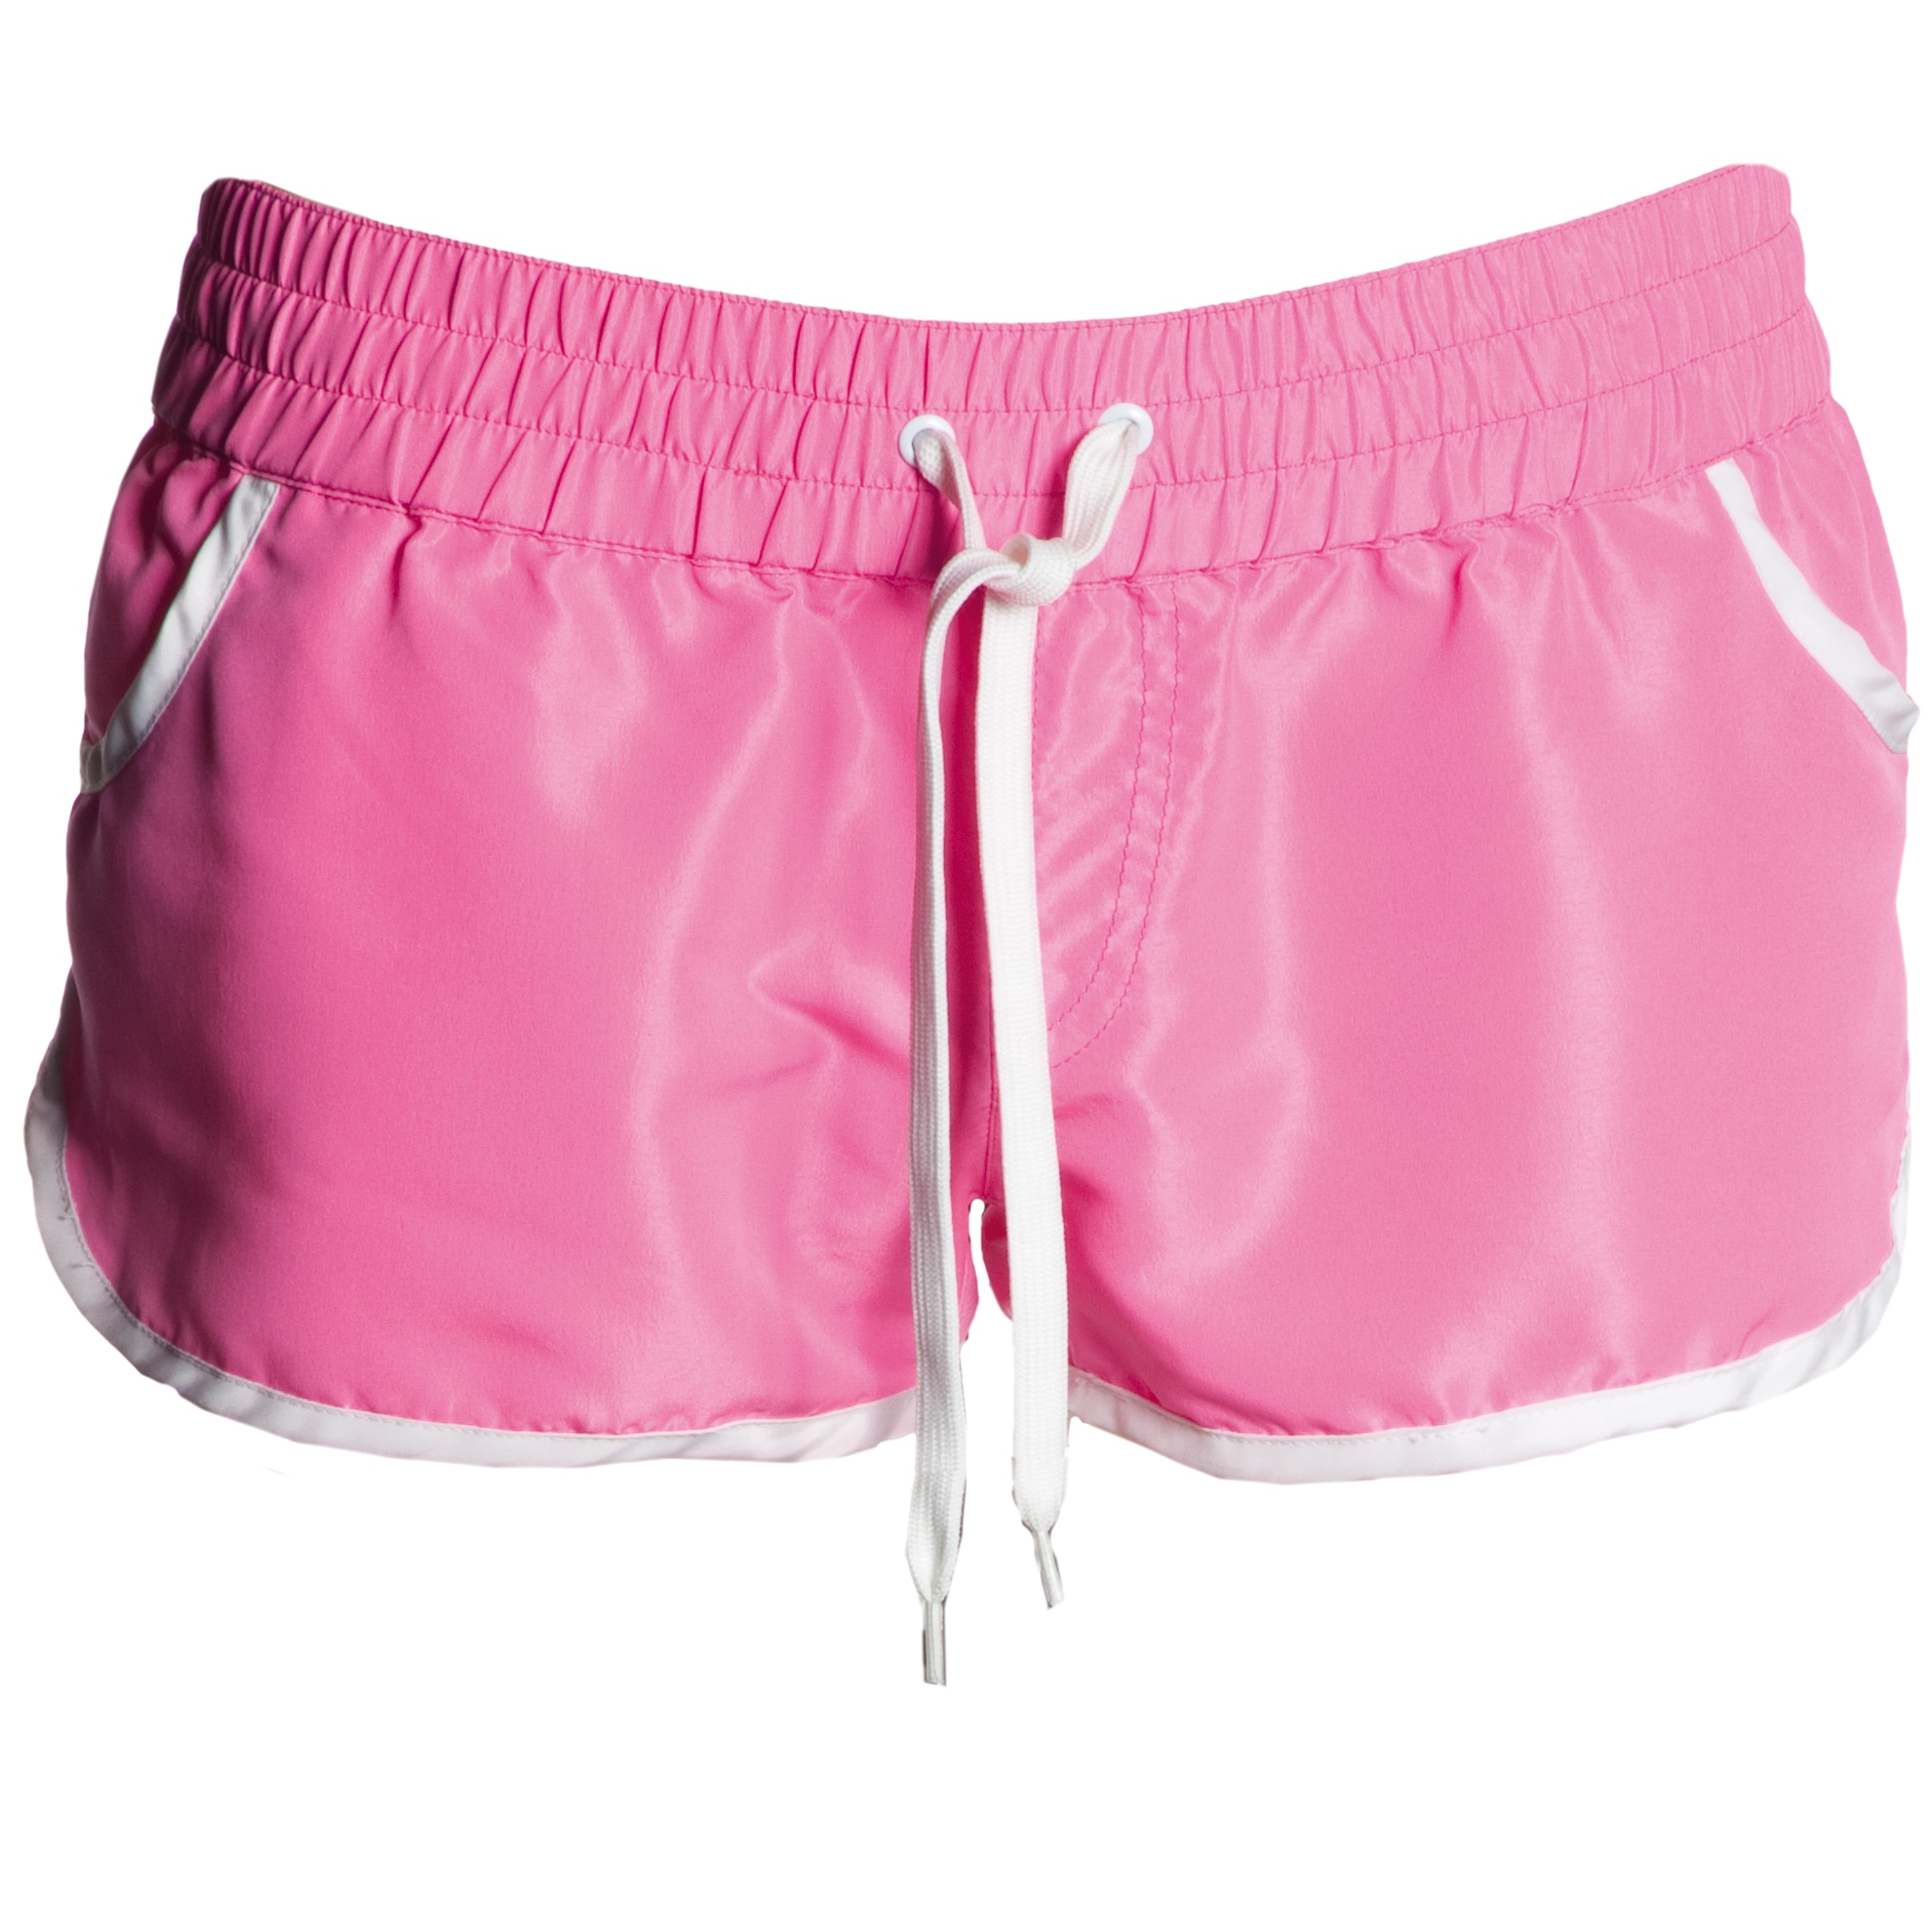 Buy Women Shark Shorts Pink - Monaco Addict